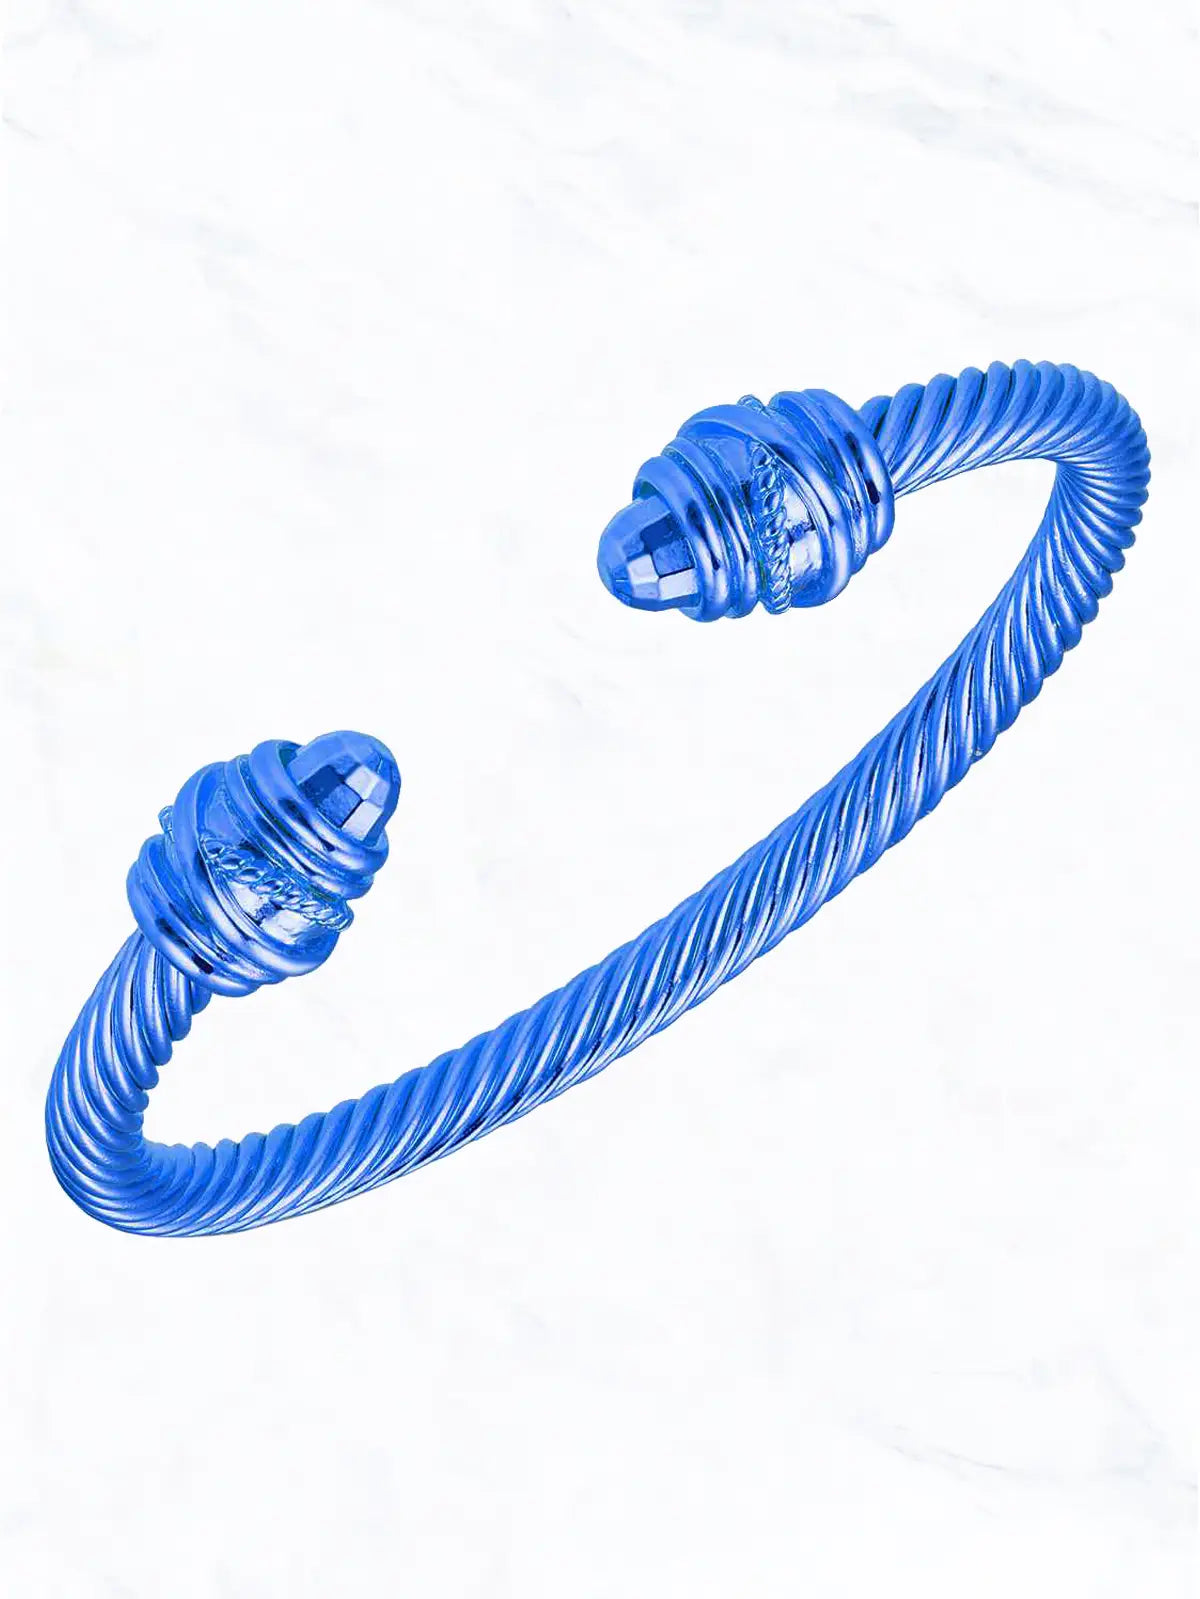 Cable Cuff Bracelets